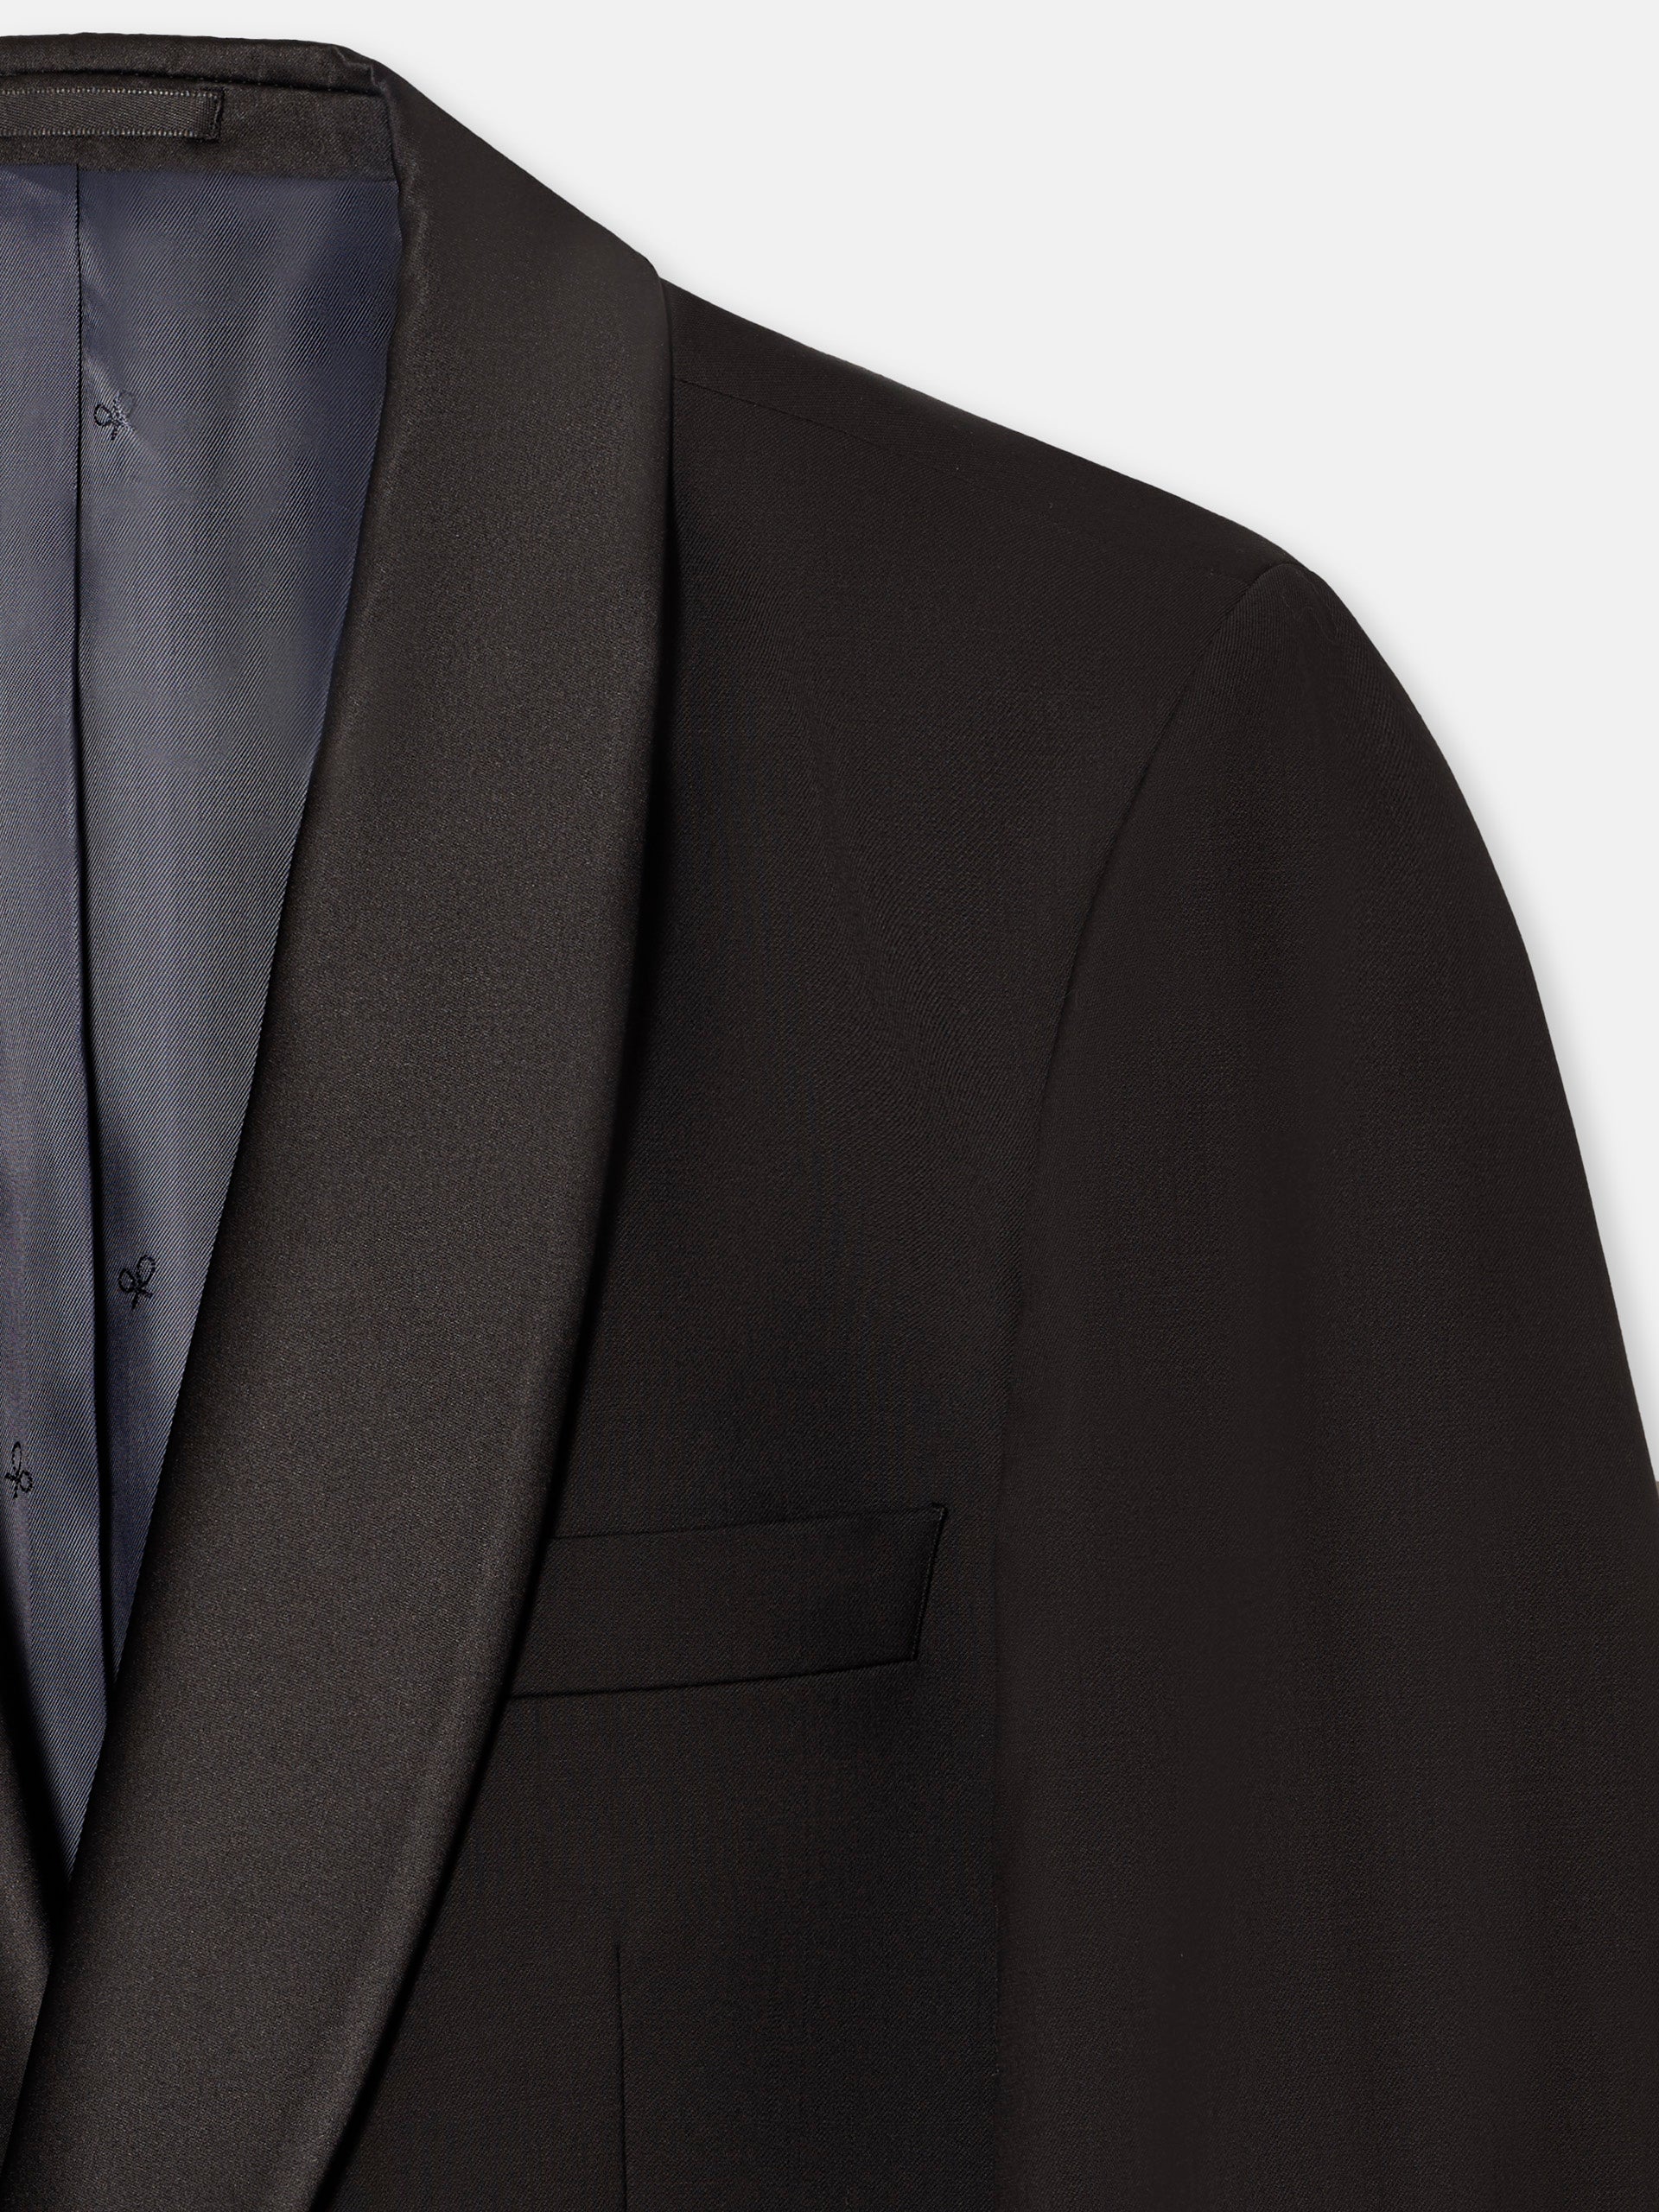 Black silbon tuxedo jacket